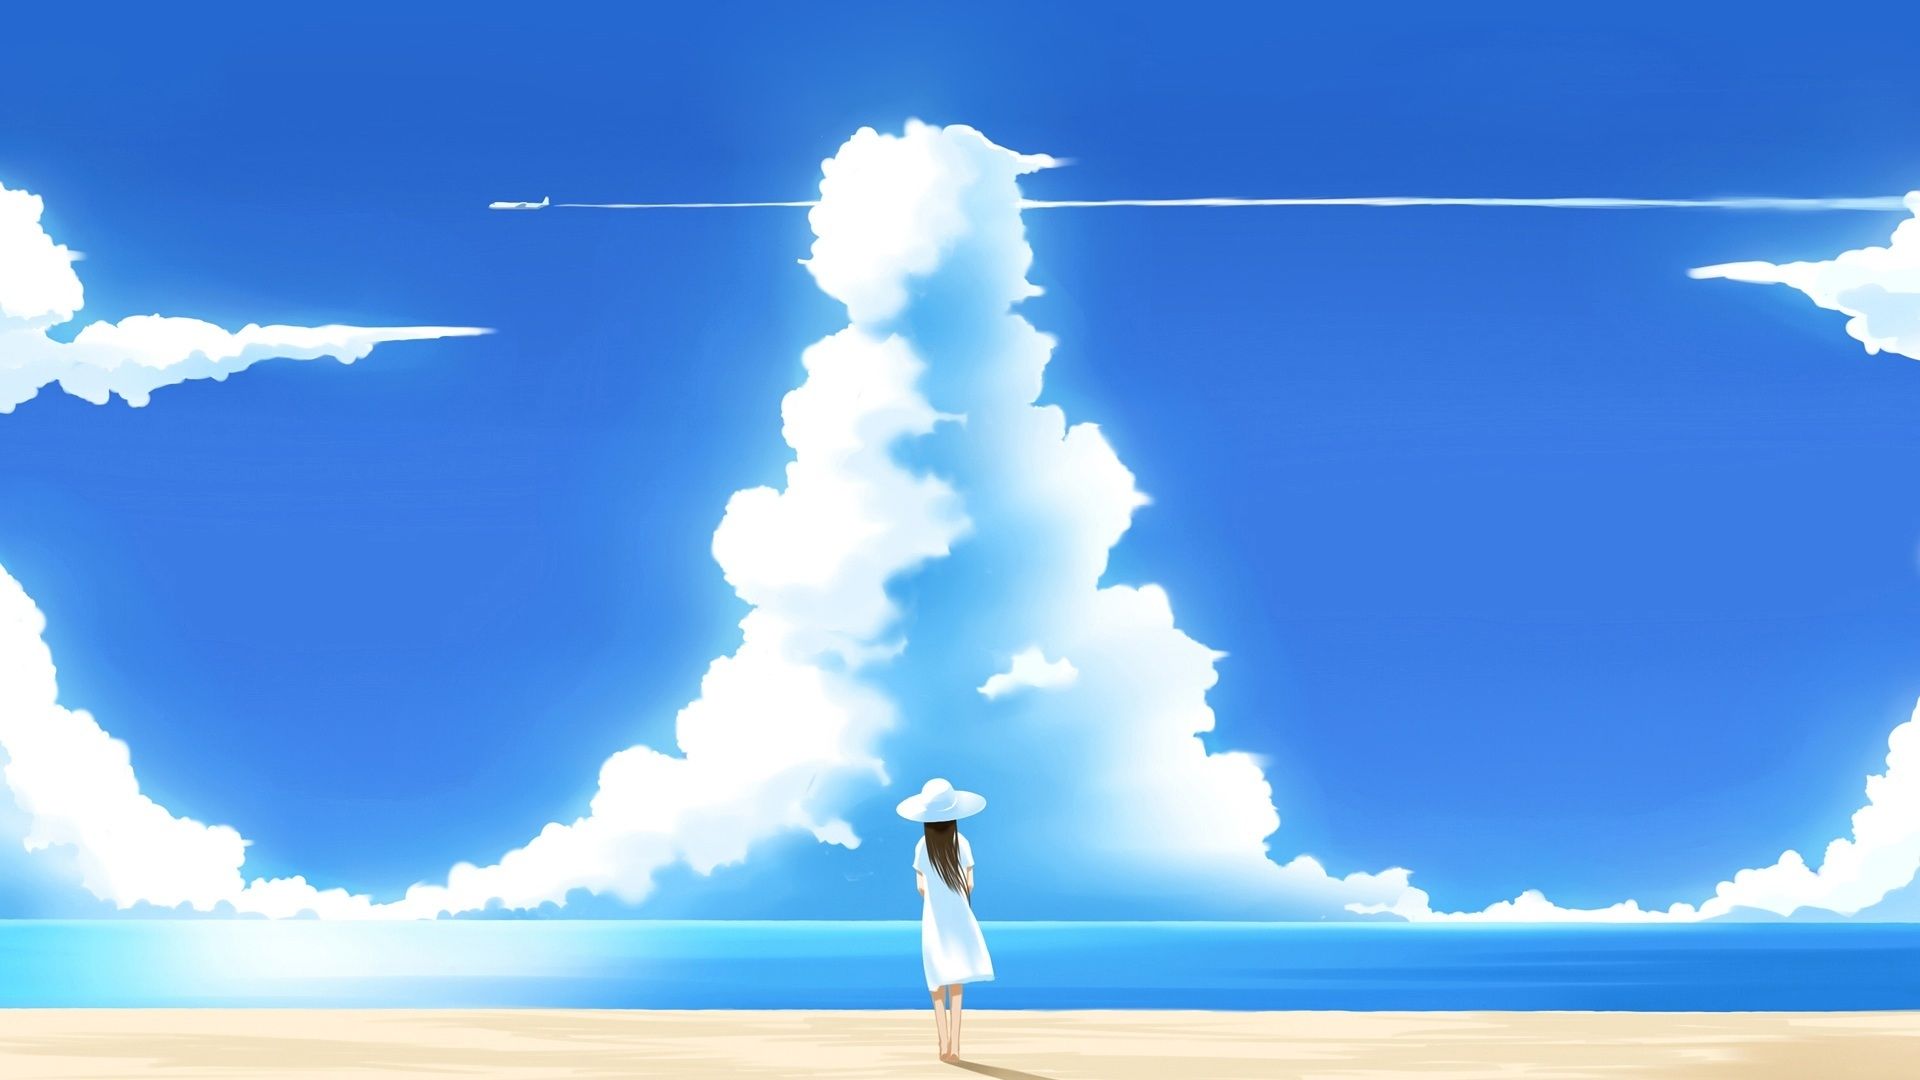 The Beach by Gong Hailiang | Beach illustration, Beach background, Beach  drawing